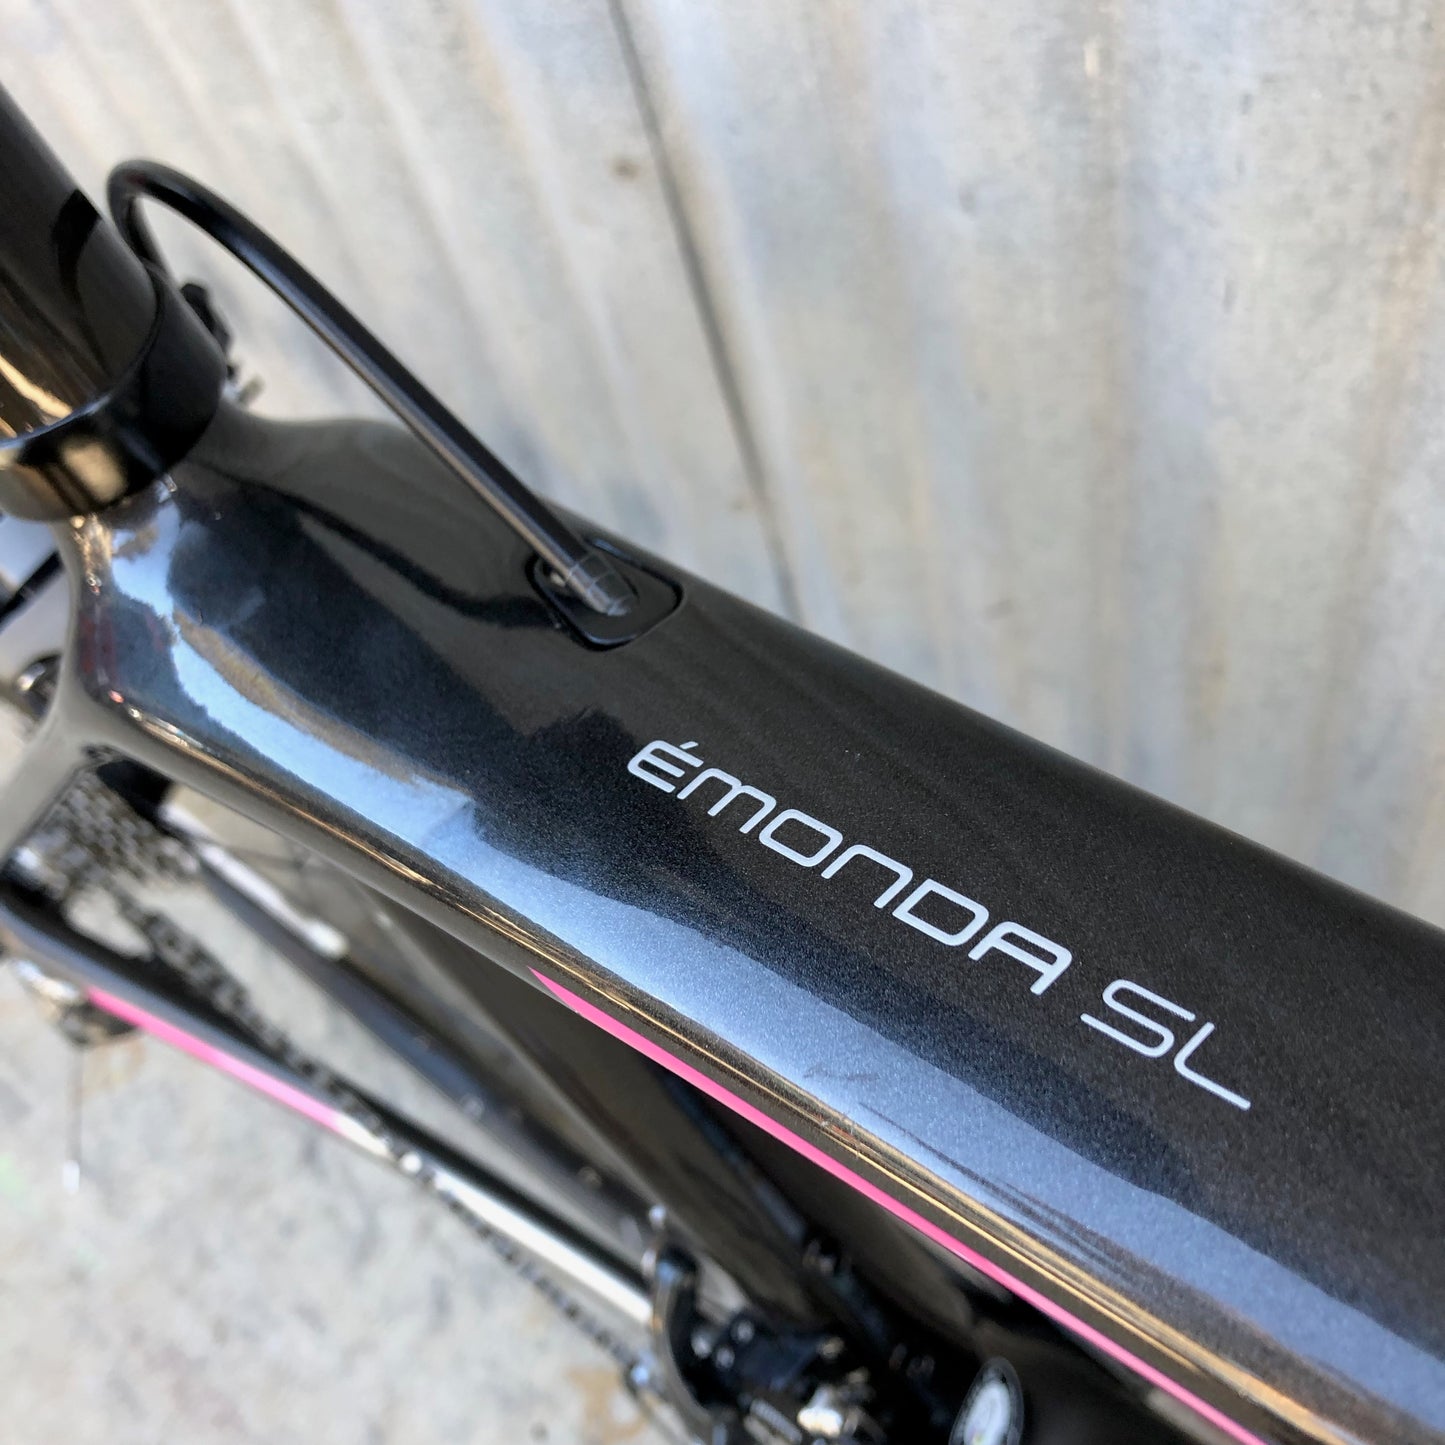 Used 2017 Trek Emonda SL 6 WSD Women's Specific High End Carbon Ultegra 11-Speed Road Bike